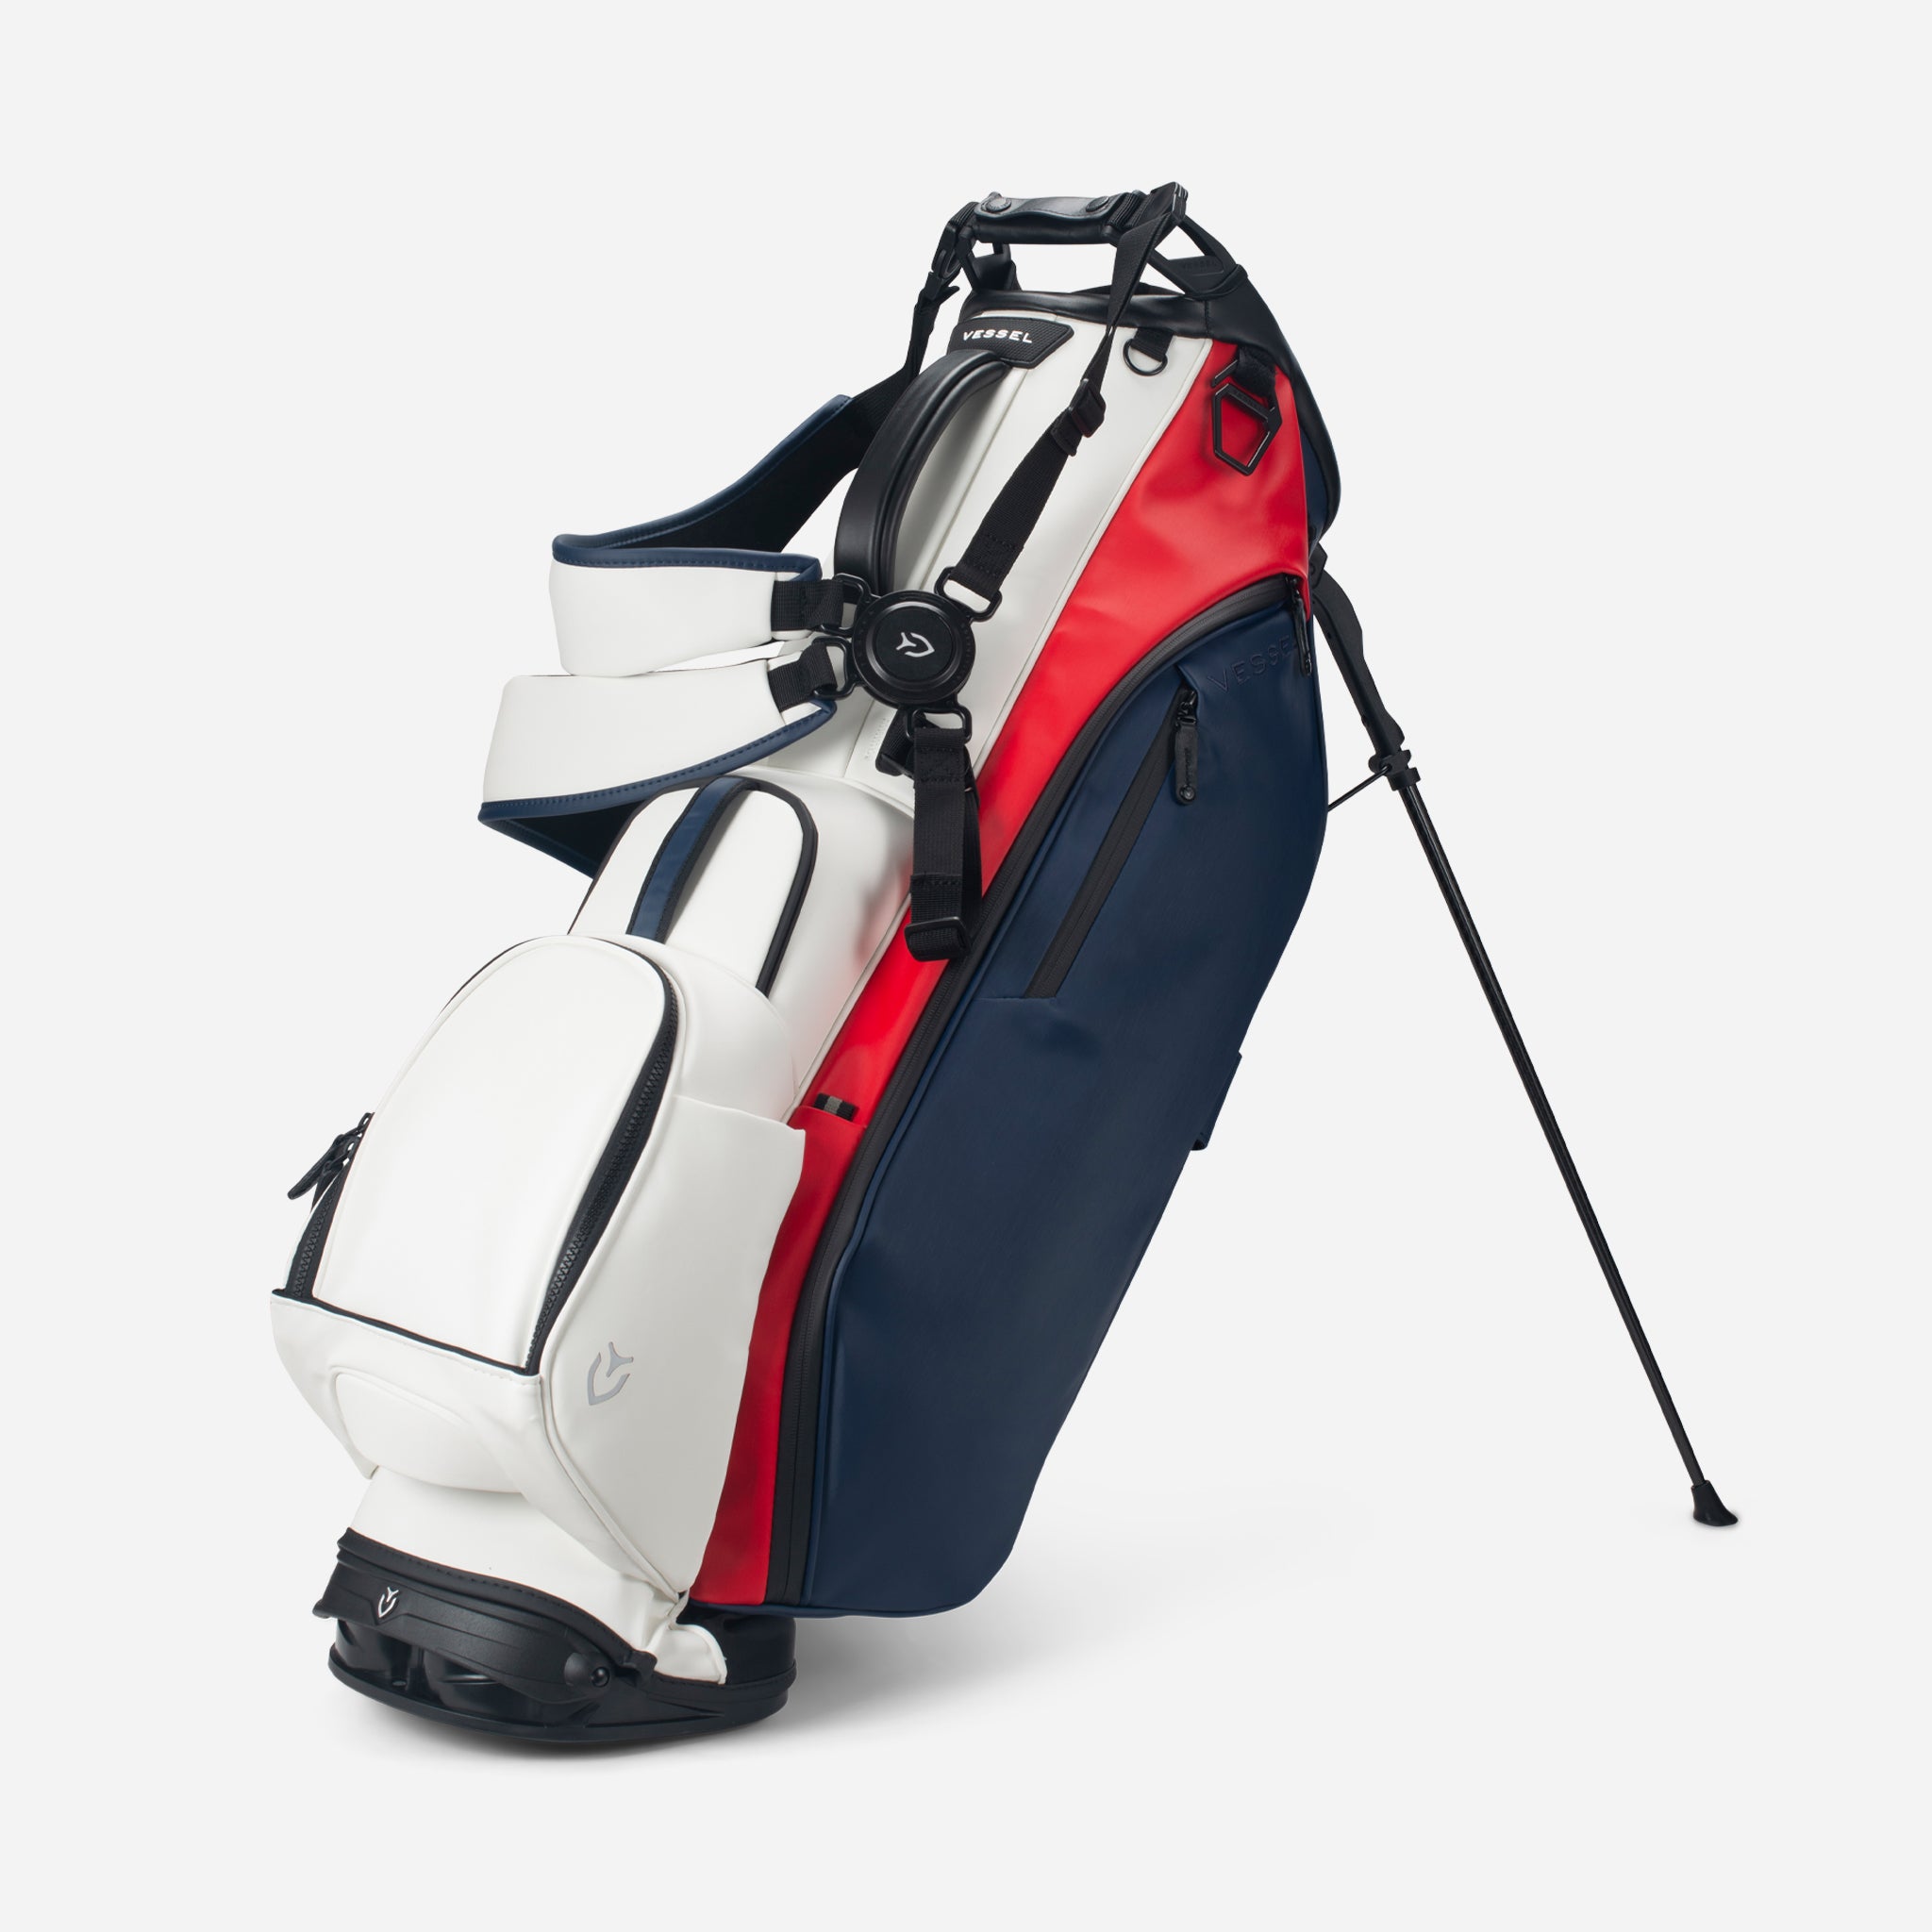 Vessel Player IV Series Golf Bags